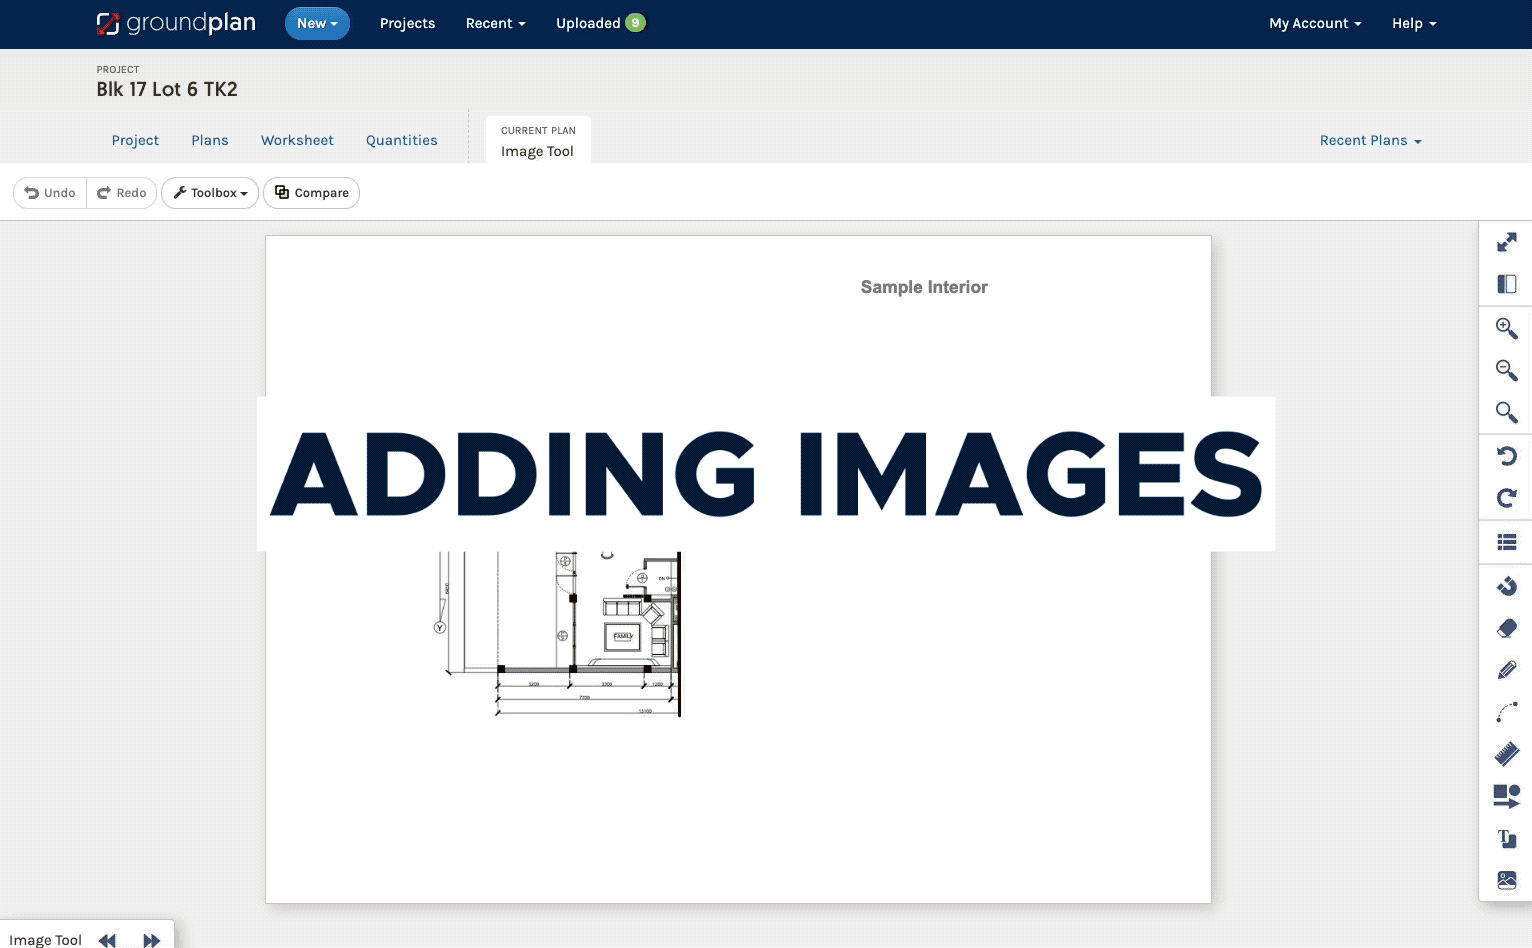 D2 - Adding Images